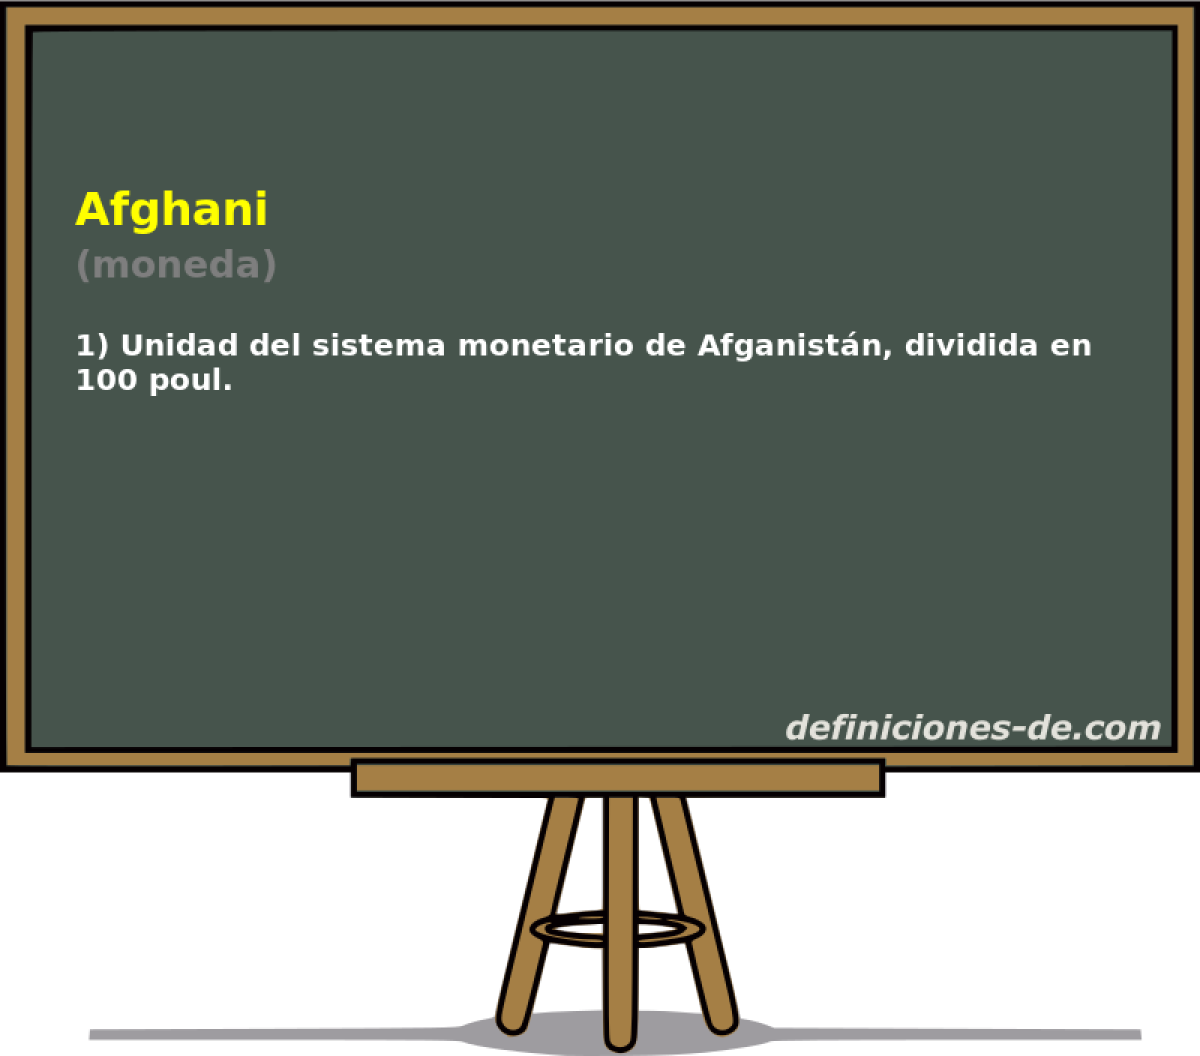 Afghani (moneda)